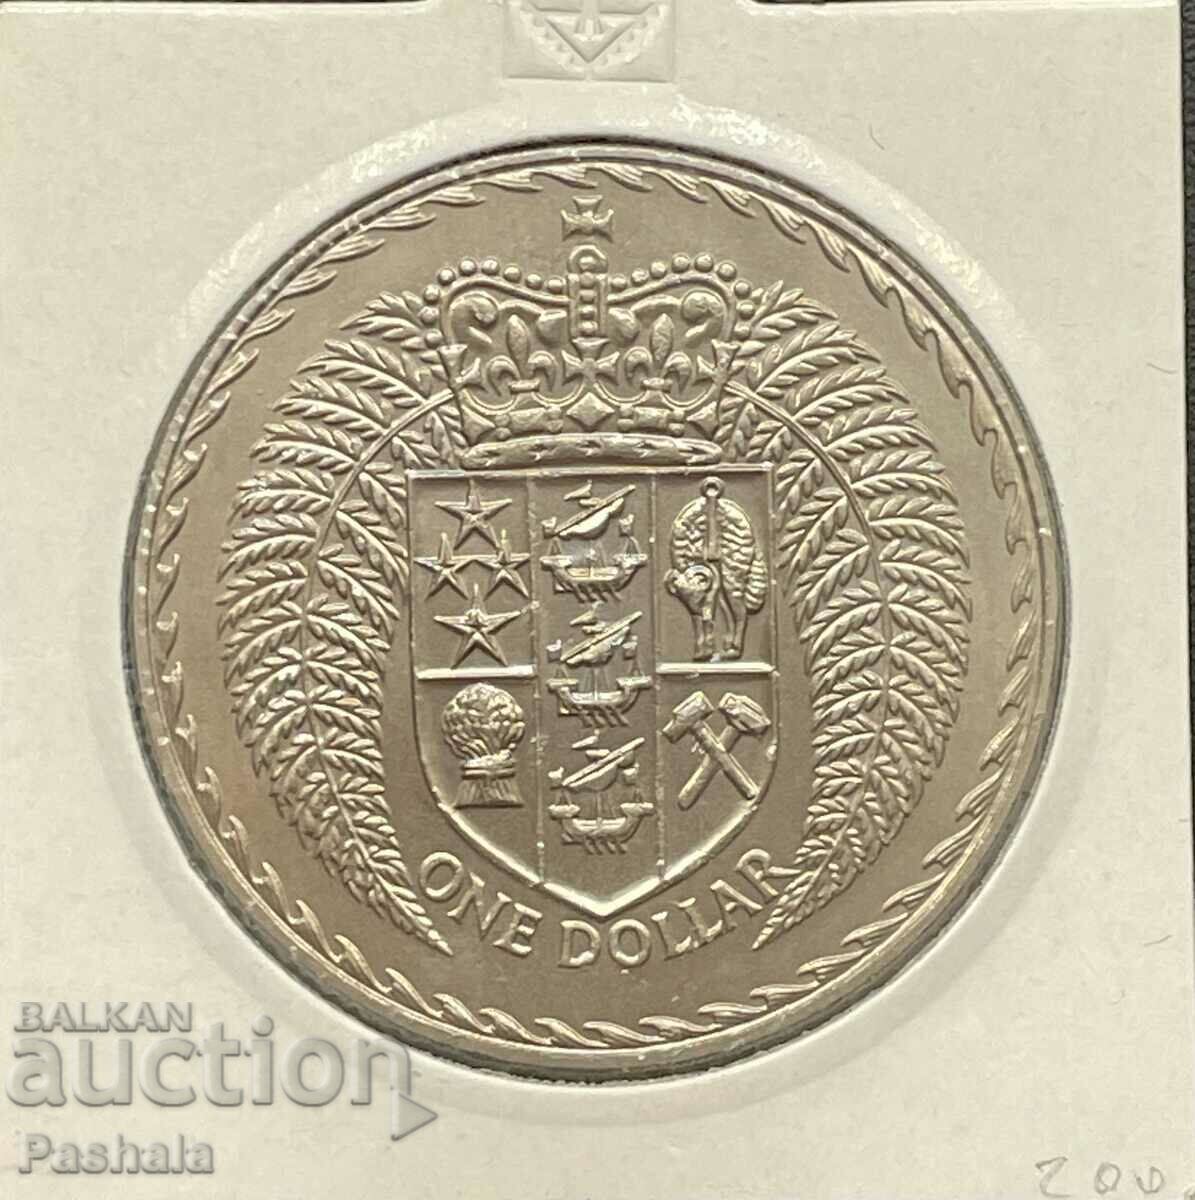 New Zealand $1 1971